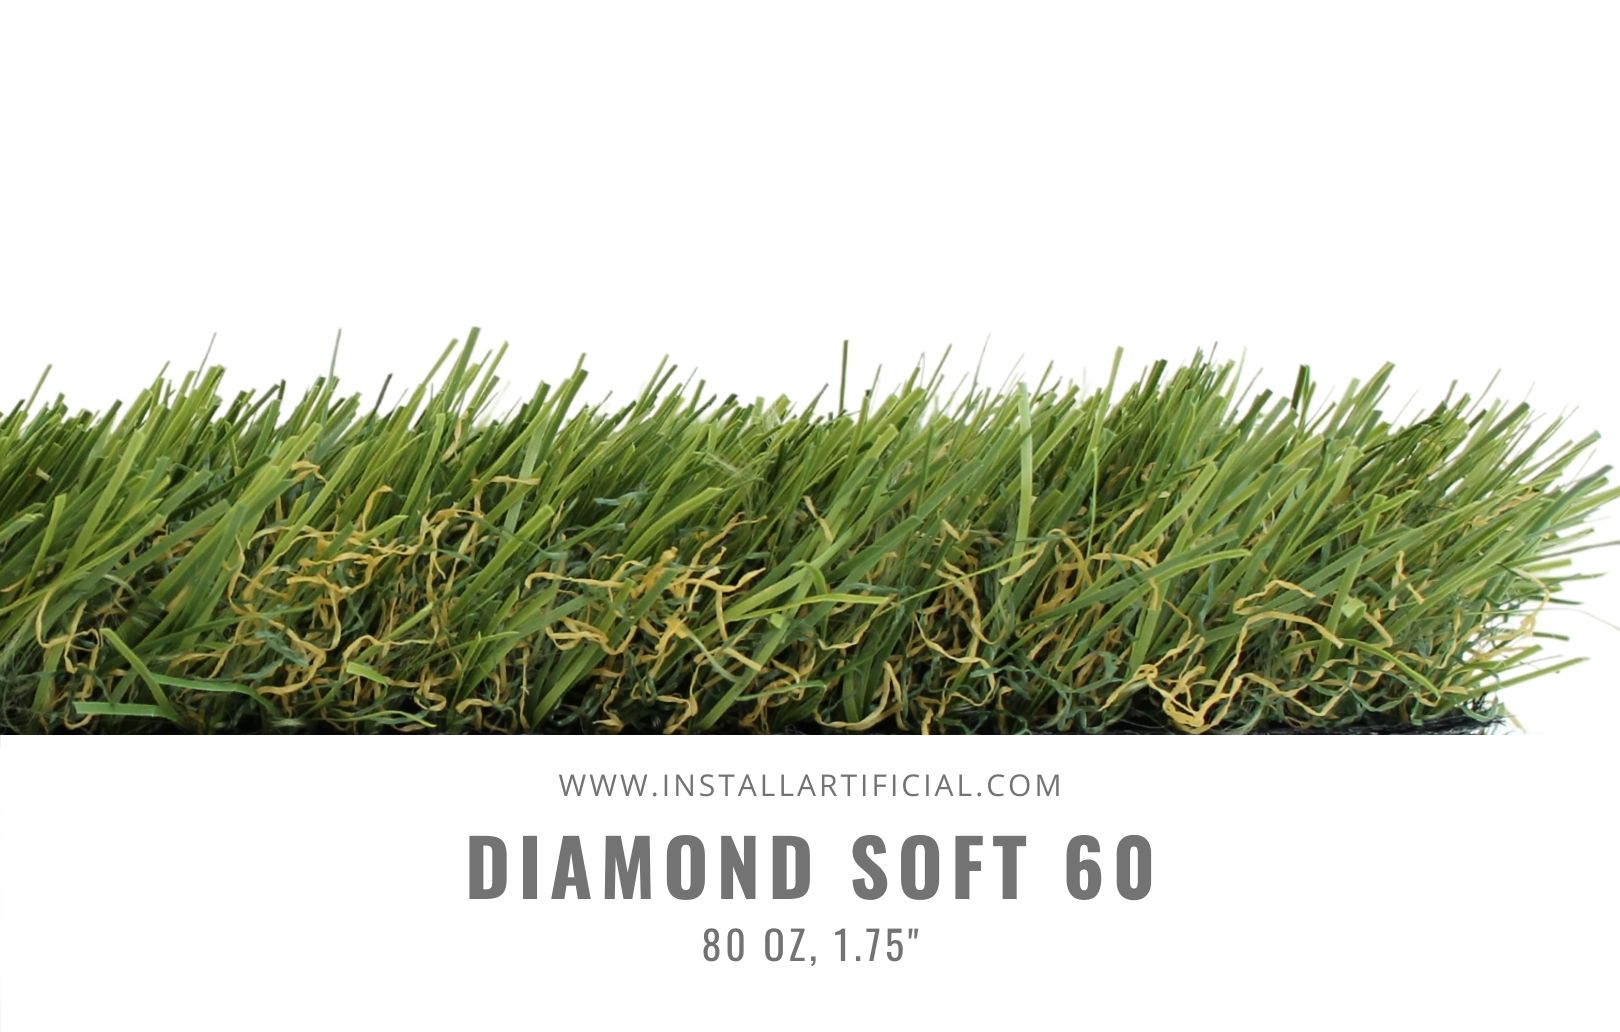 Diamond Soft 60, Smart Turf, side